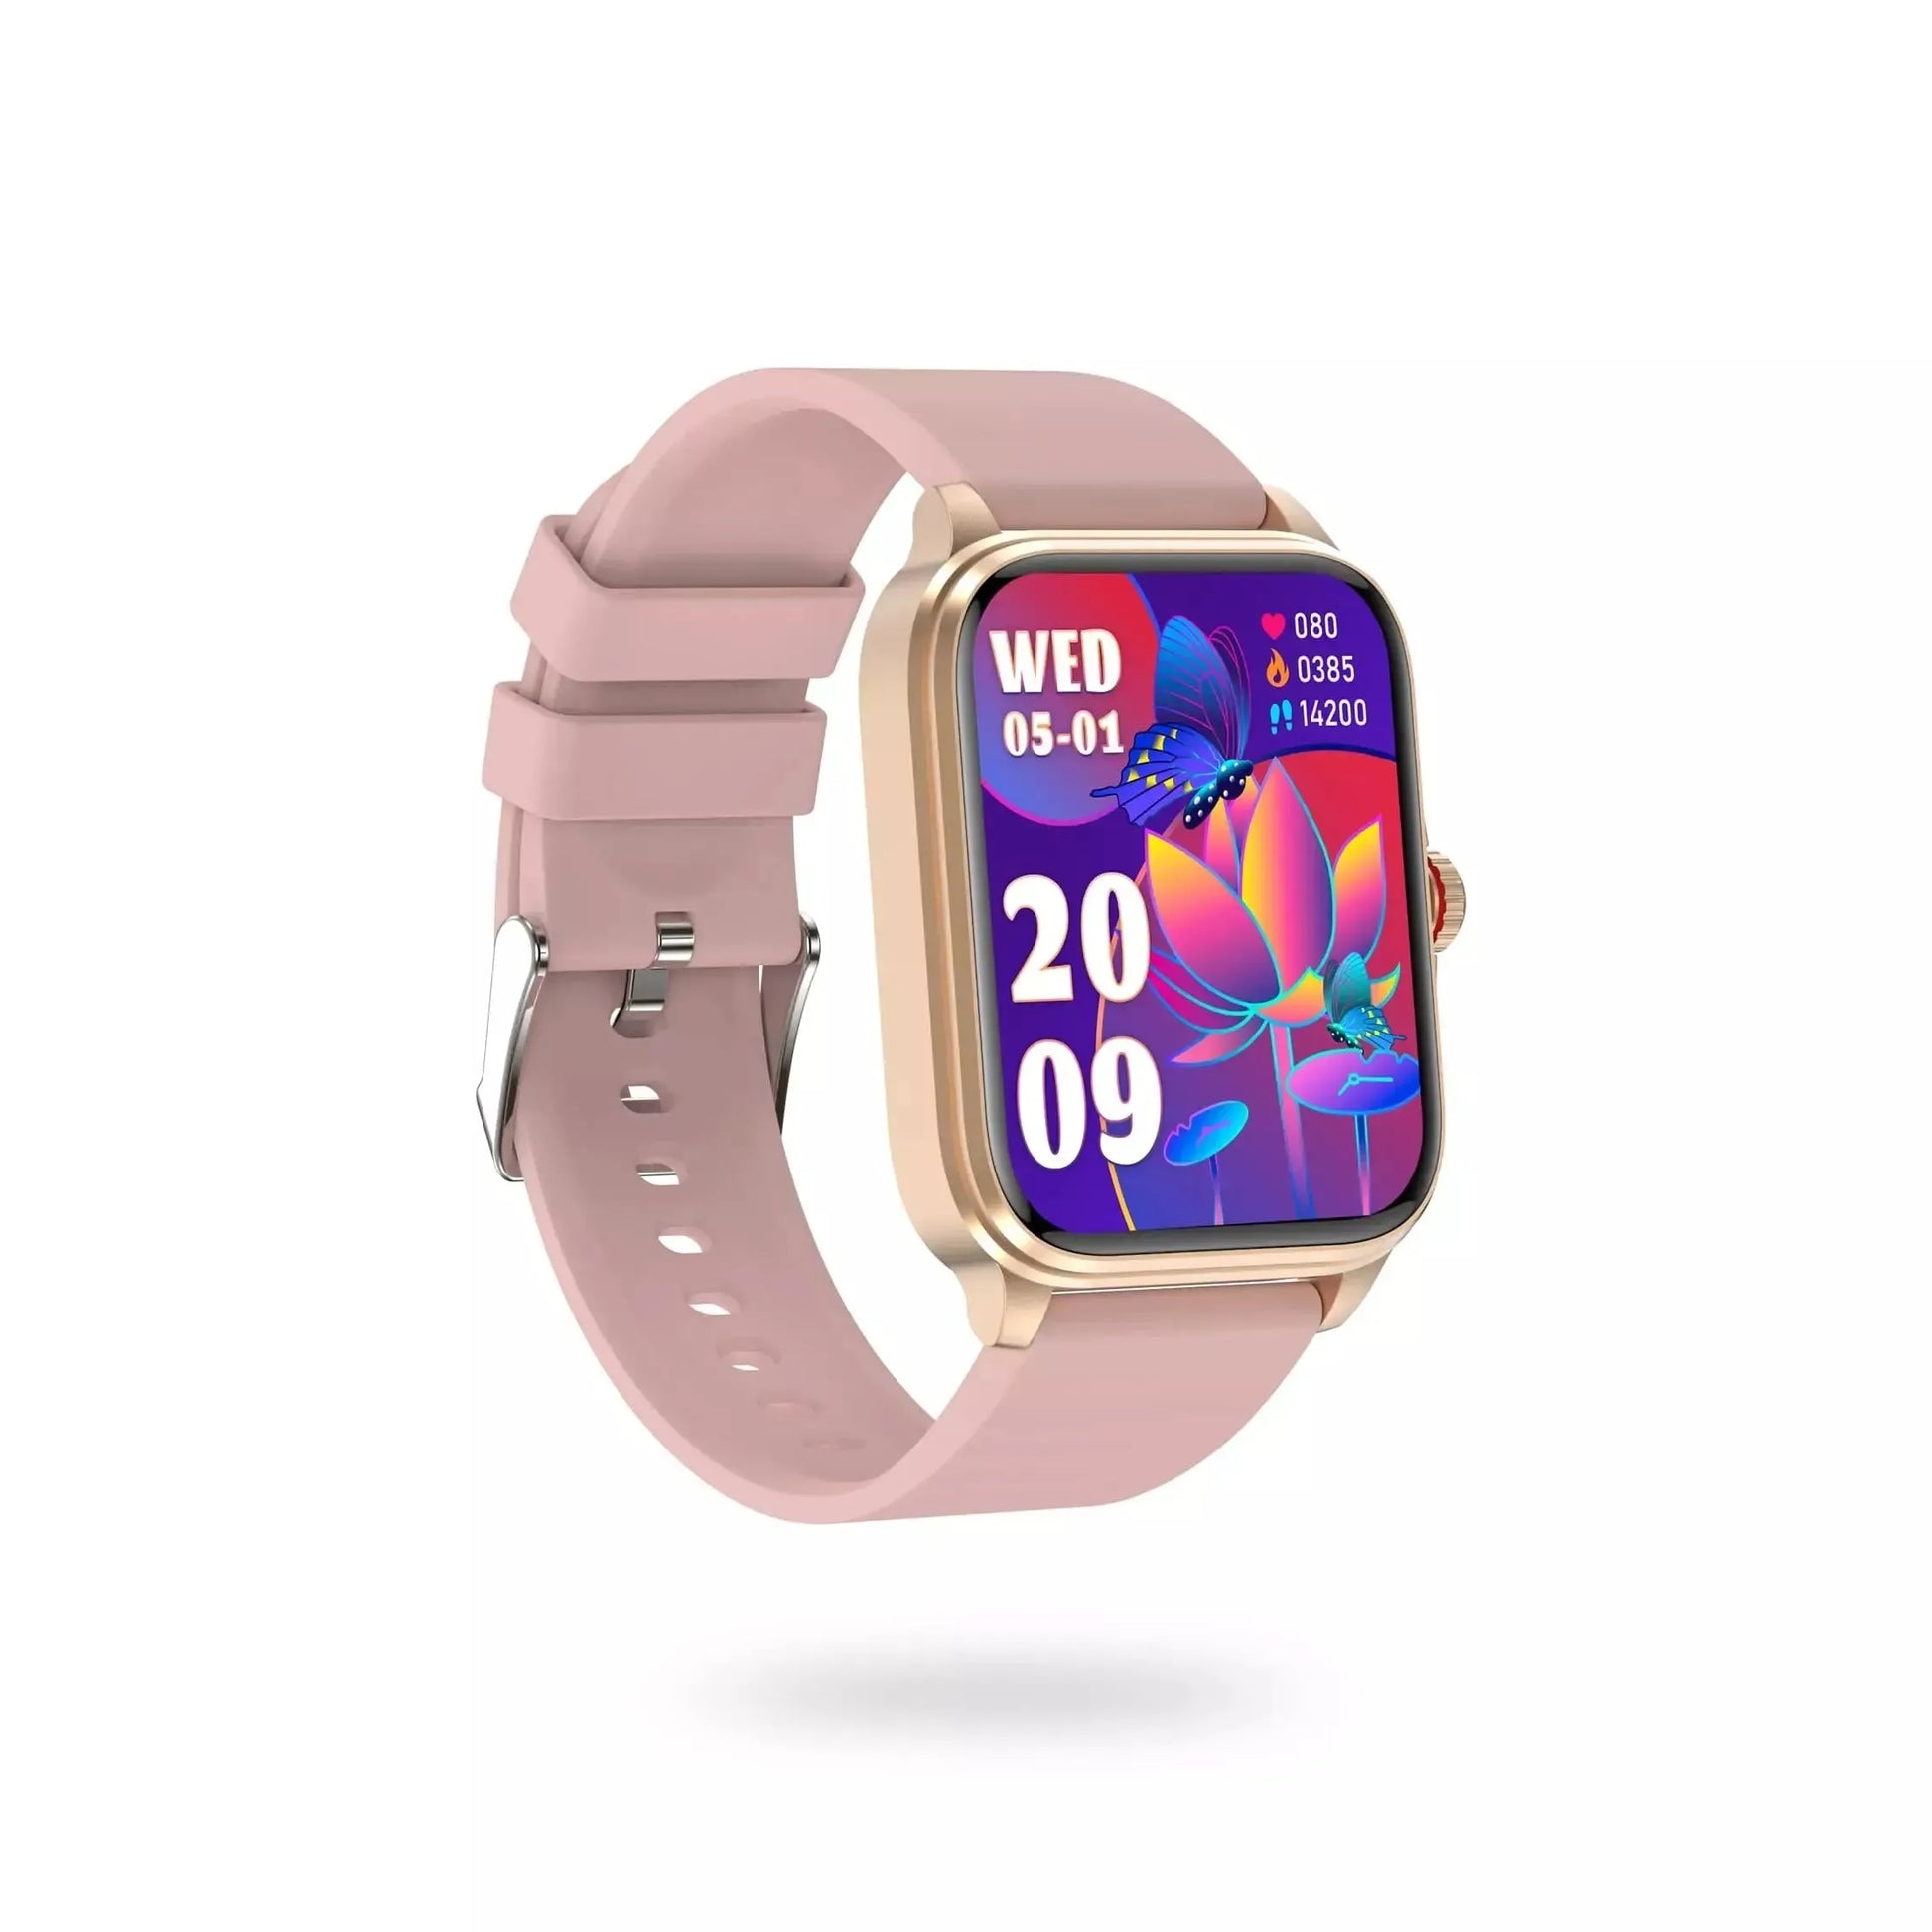 Tousains smartwatch P1 in pink